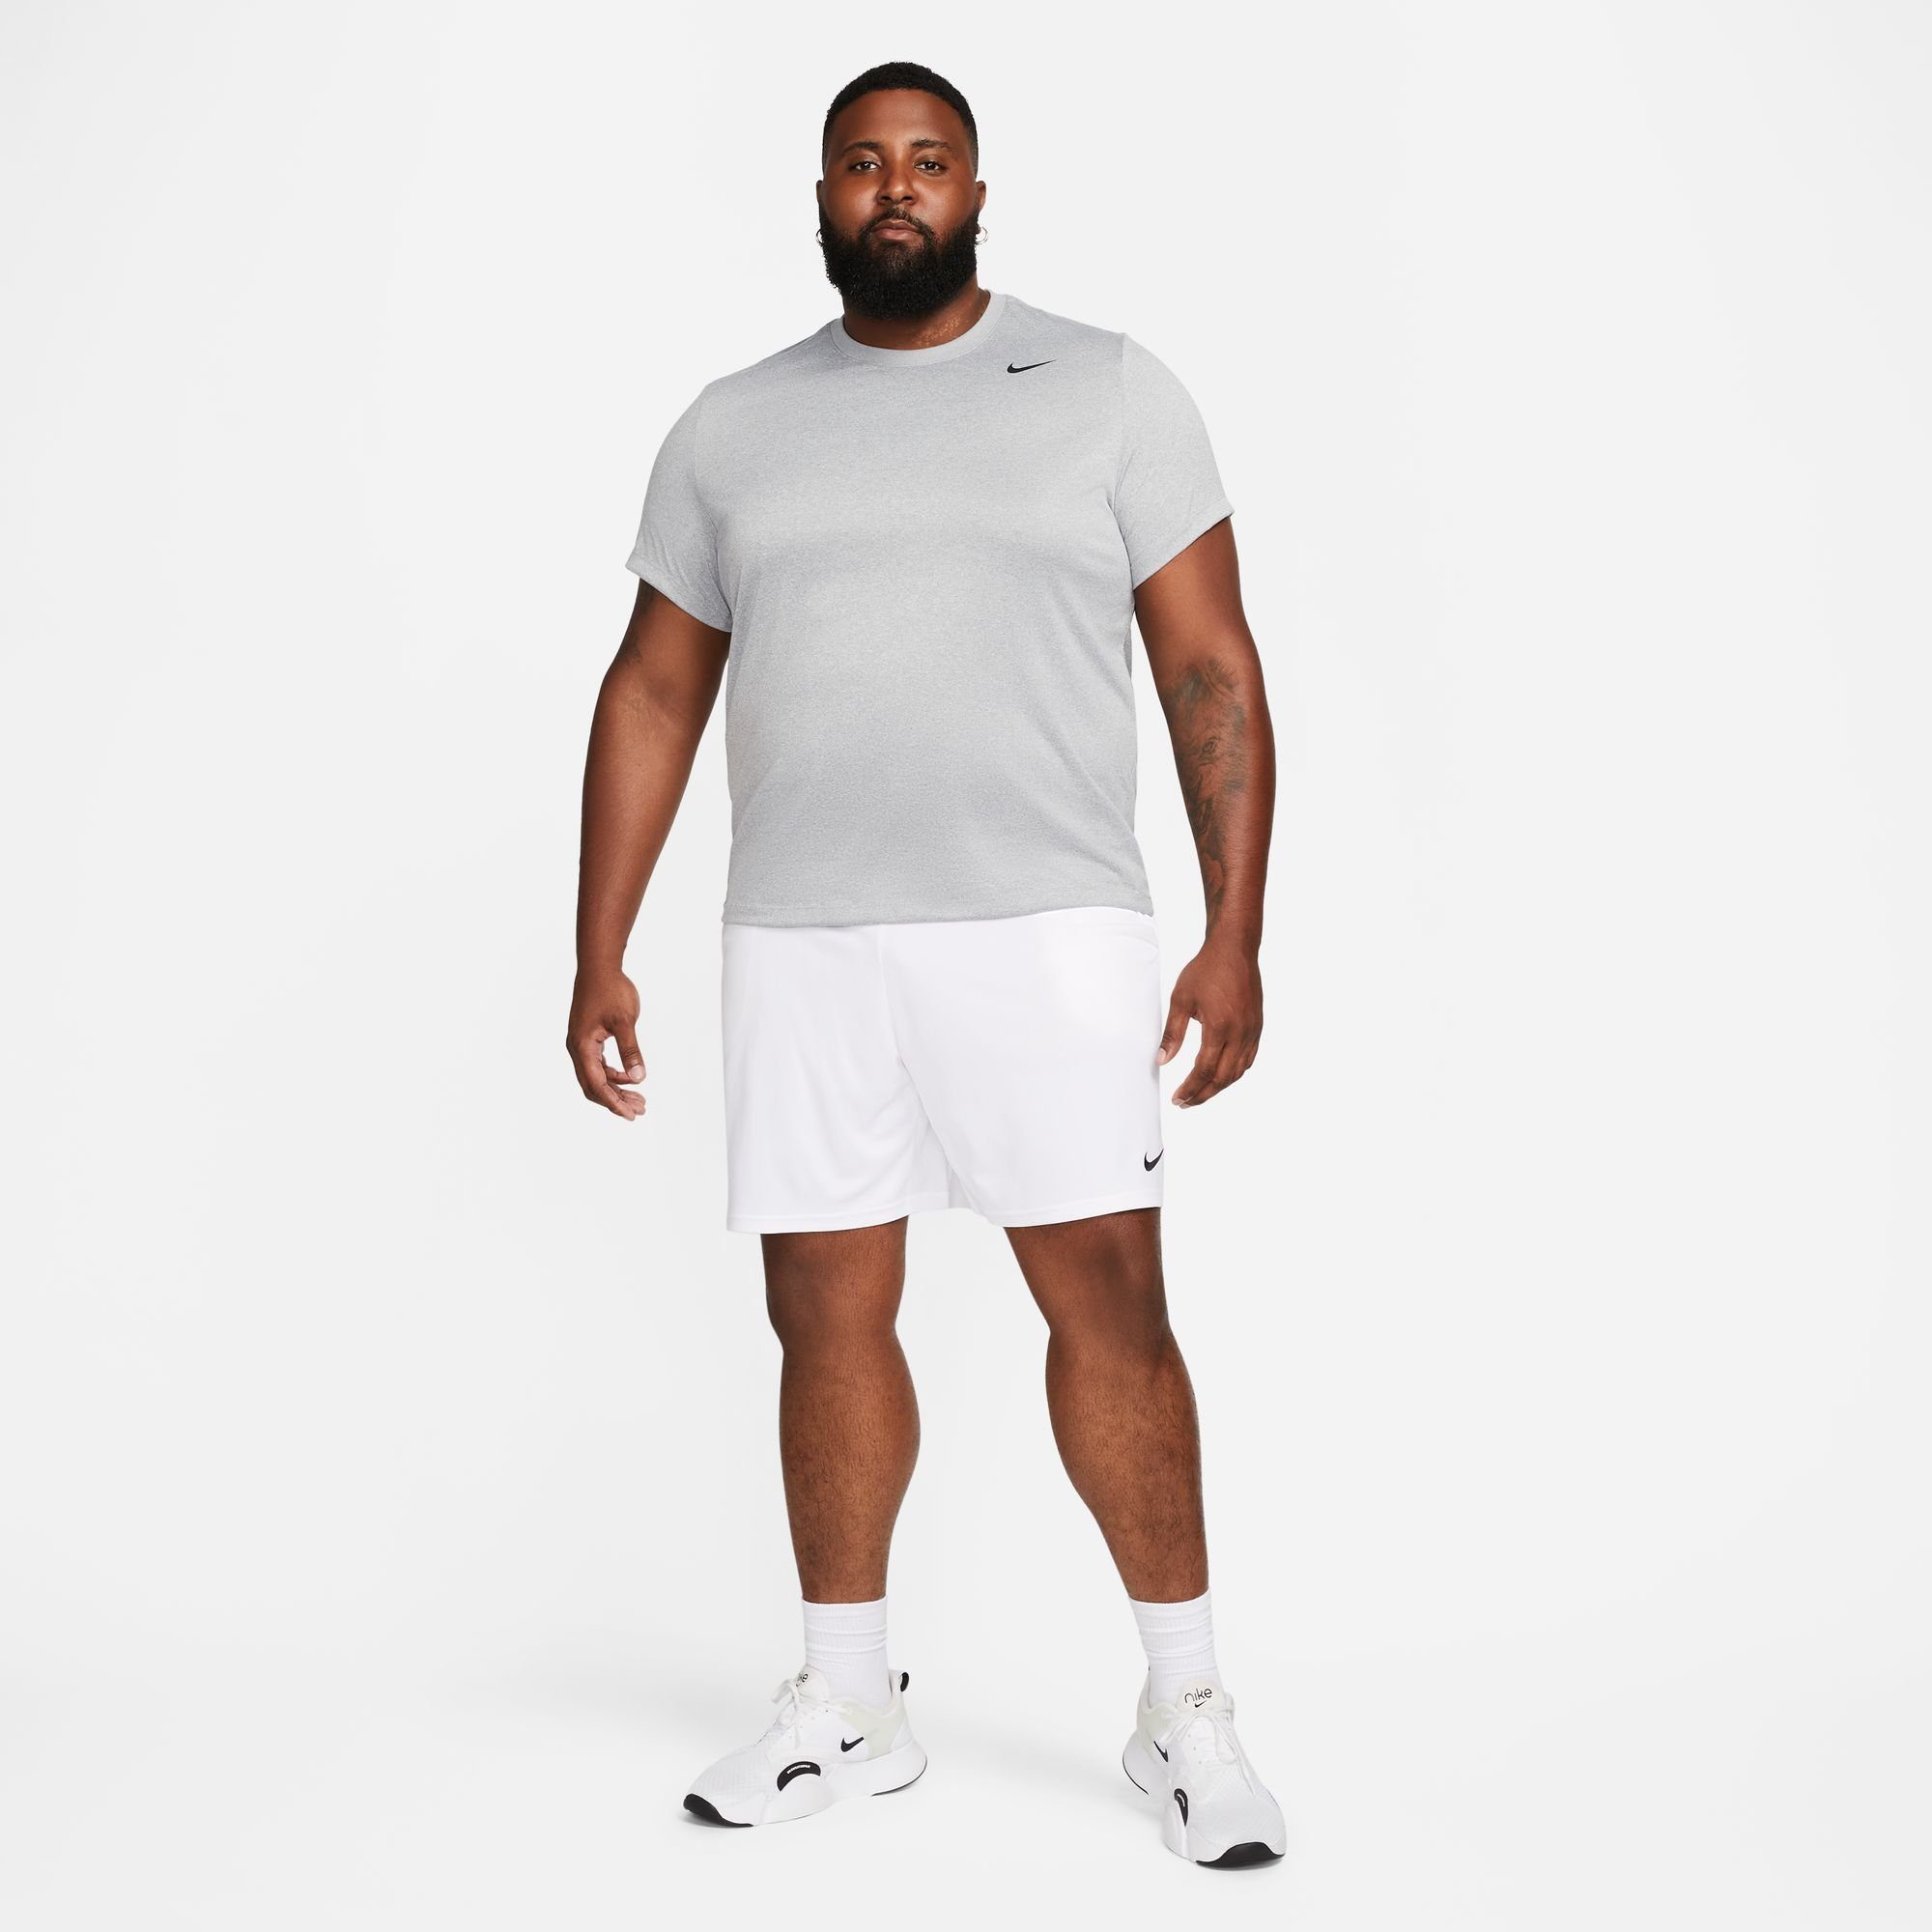 Nike Trainingsshirt DRI-FIT LEGEND SILVER/HTR/BLACK MEN'S FITNESS T-SHIRT TUMBLED GREY/FLT